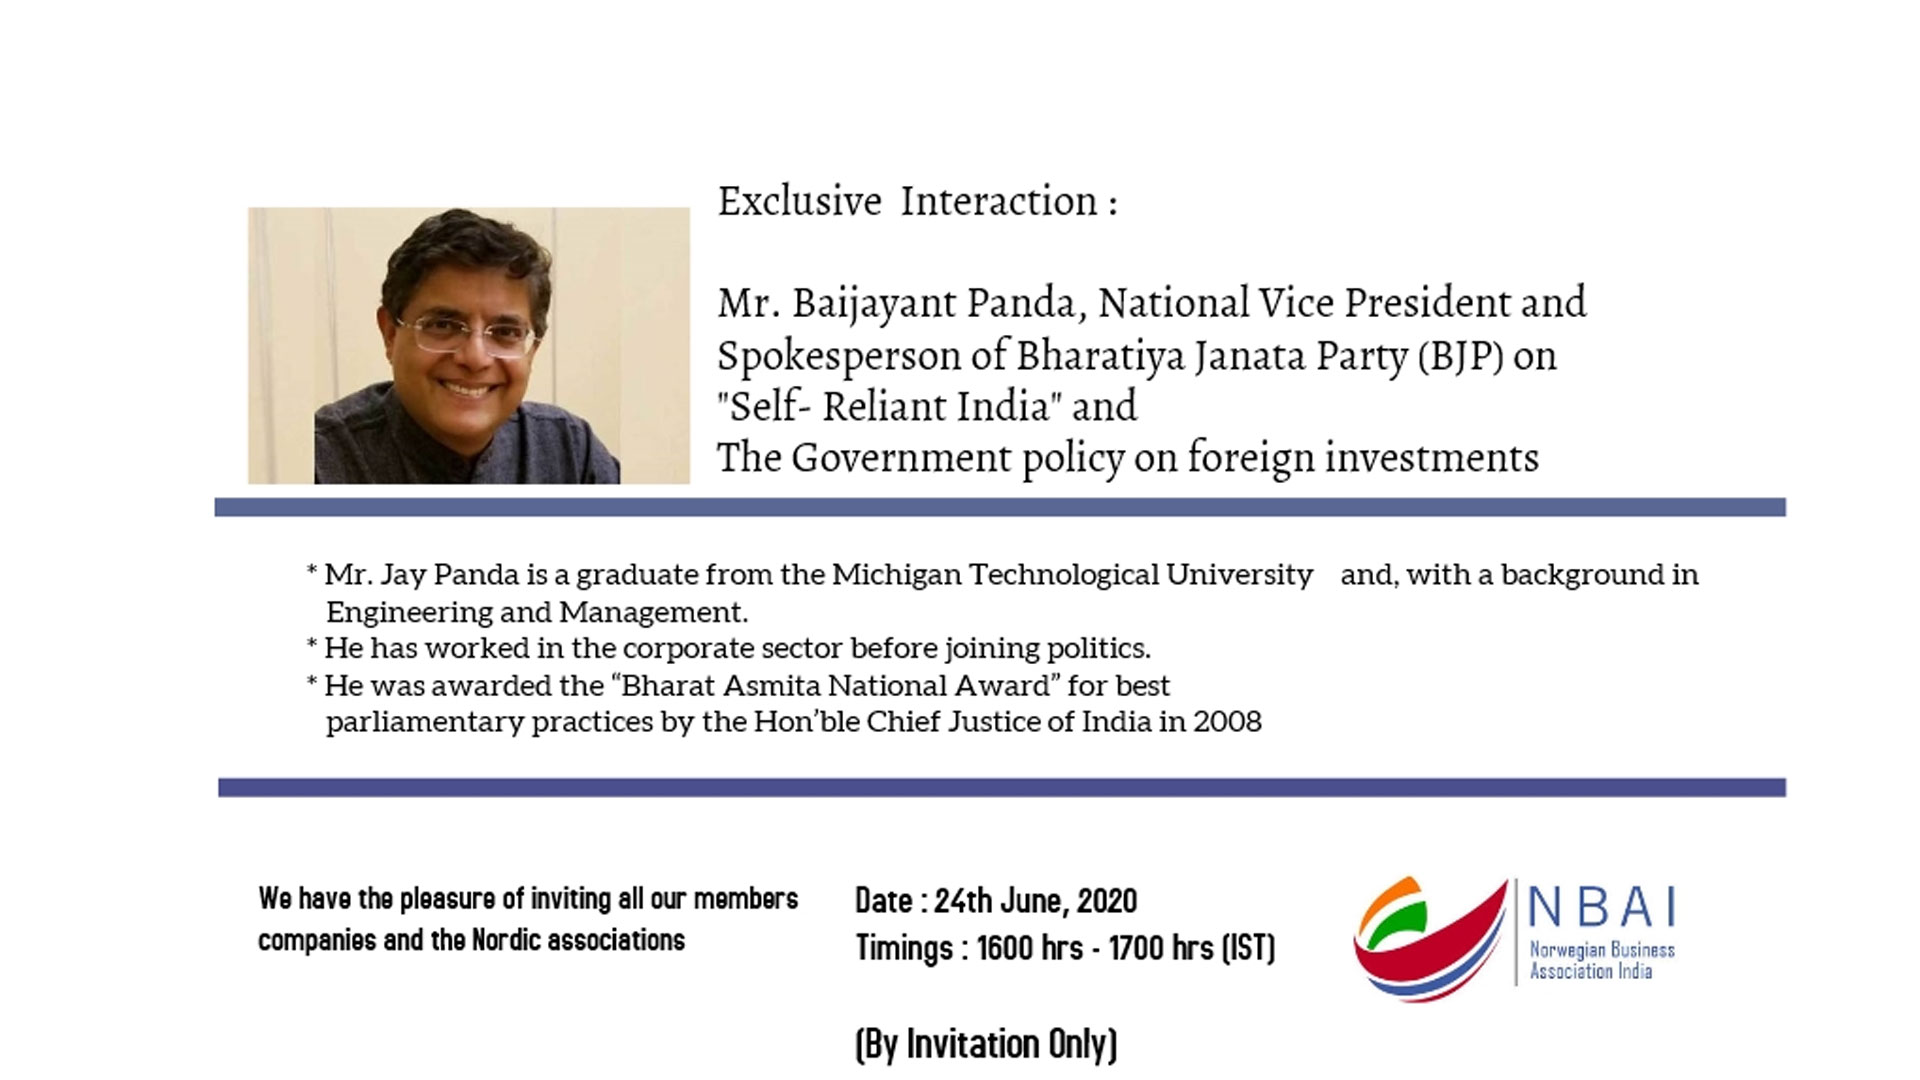 EXCLUSIVE INTERACTION WITH MR. BAIJAYANT PANDA, NATIONAL VICE PRESIDENT AND SPOKESPERSON OF BHARATIYA JANATA PARTY